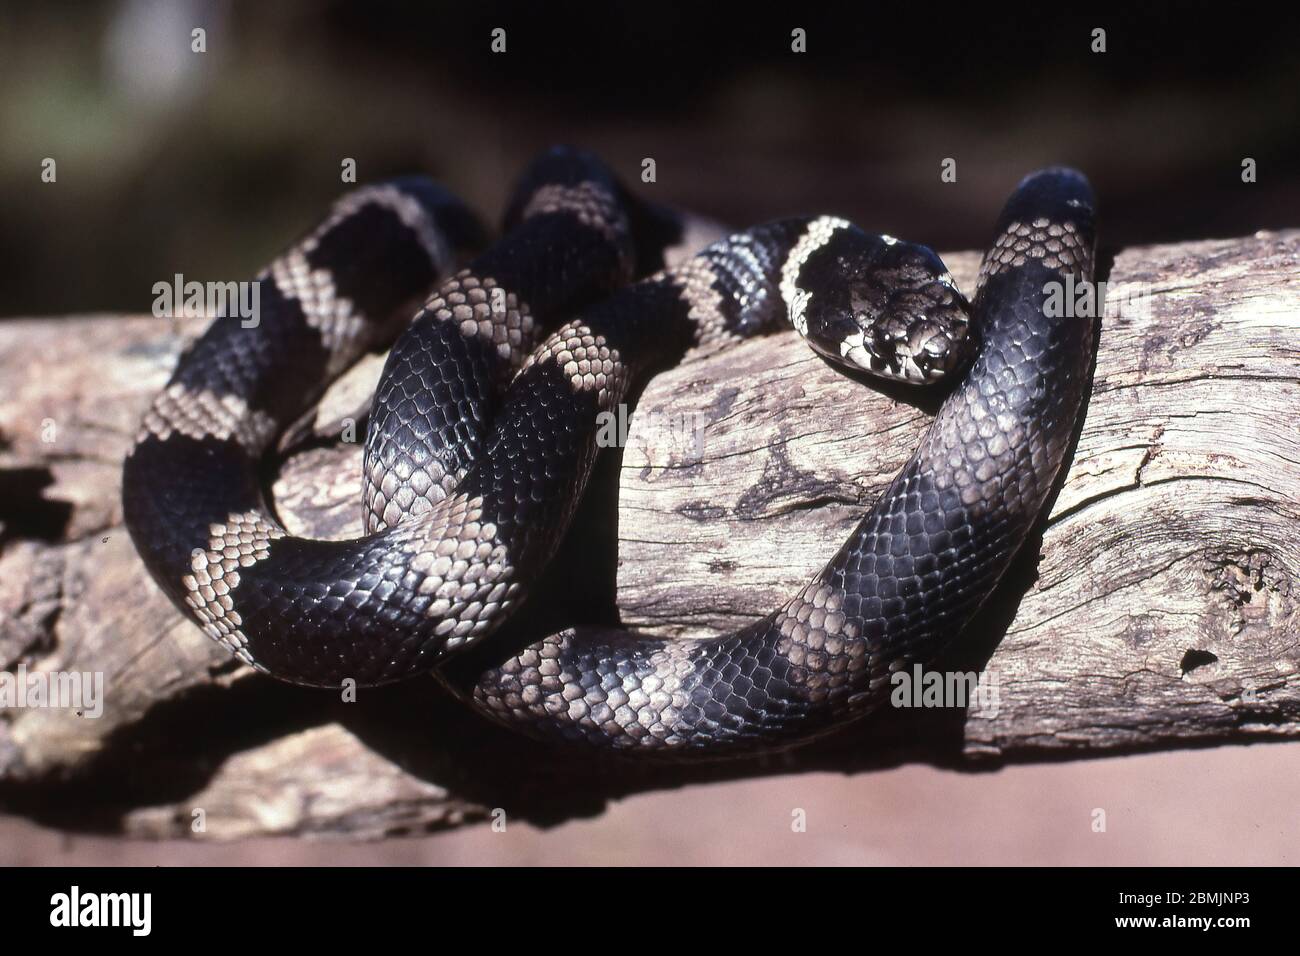 Stephen's Banded Snake Stock Photo - Alamy